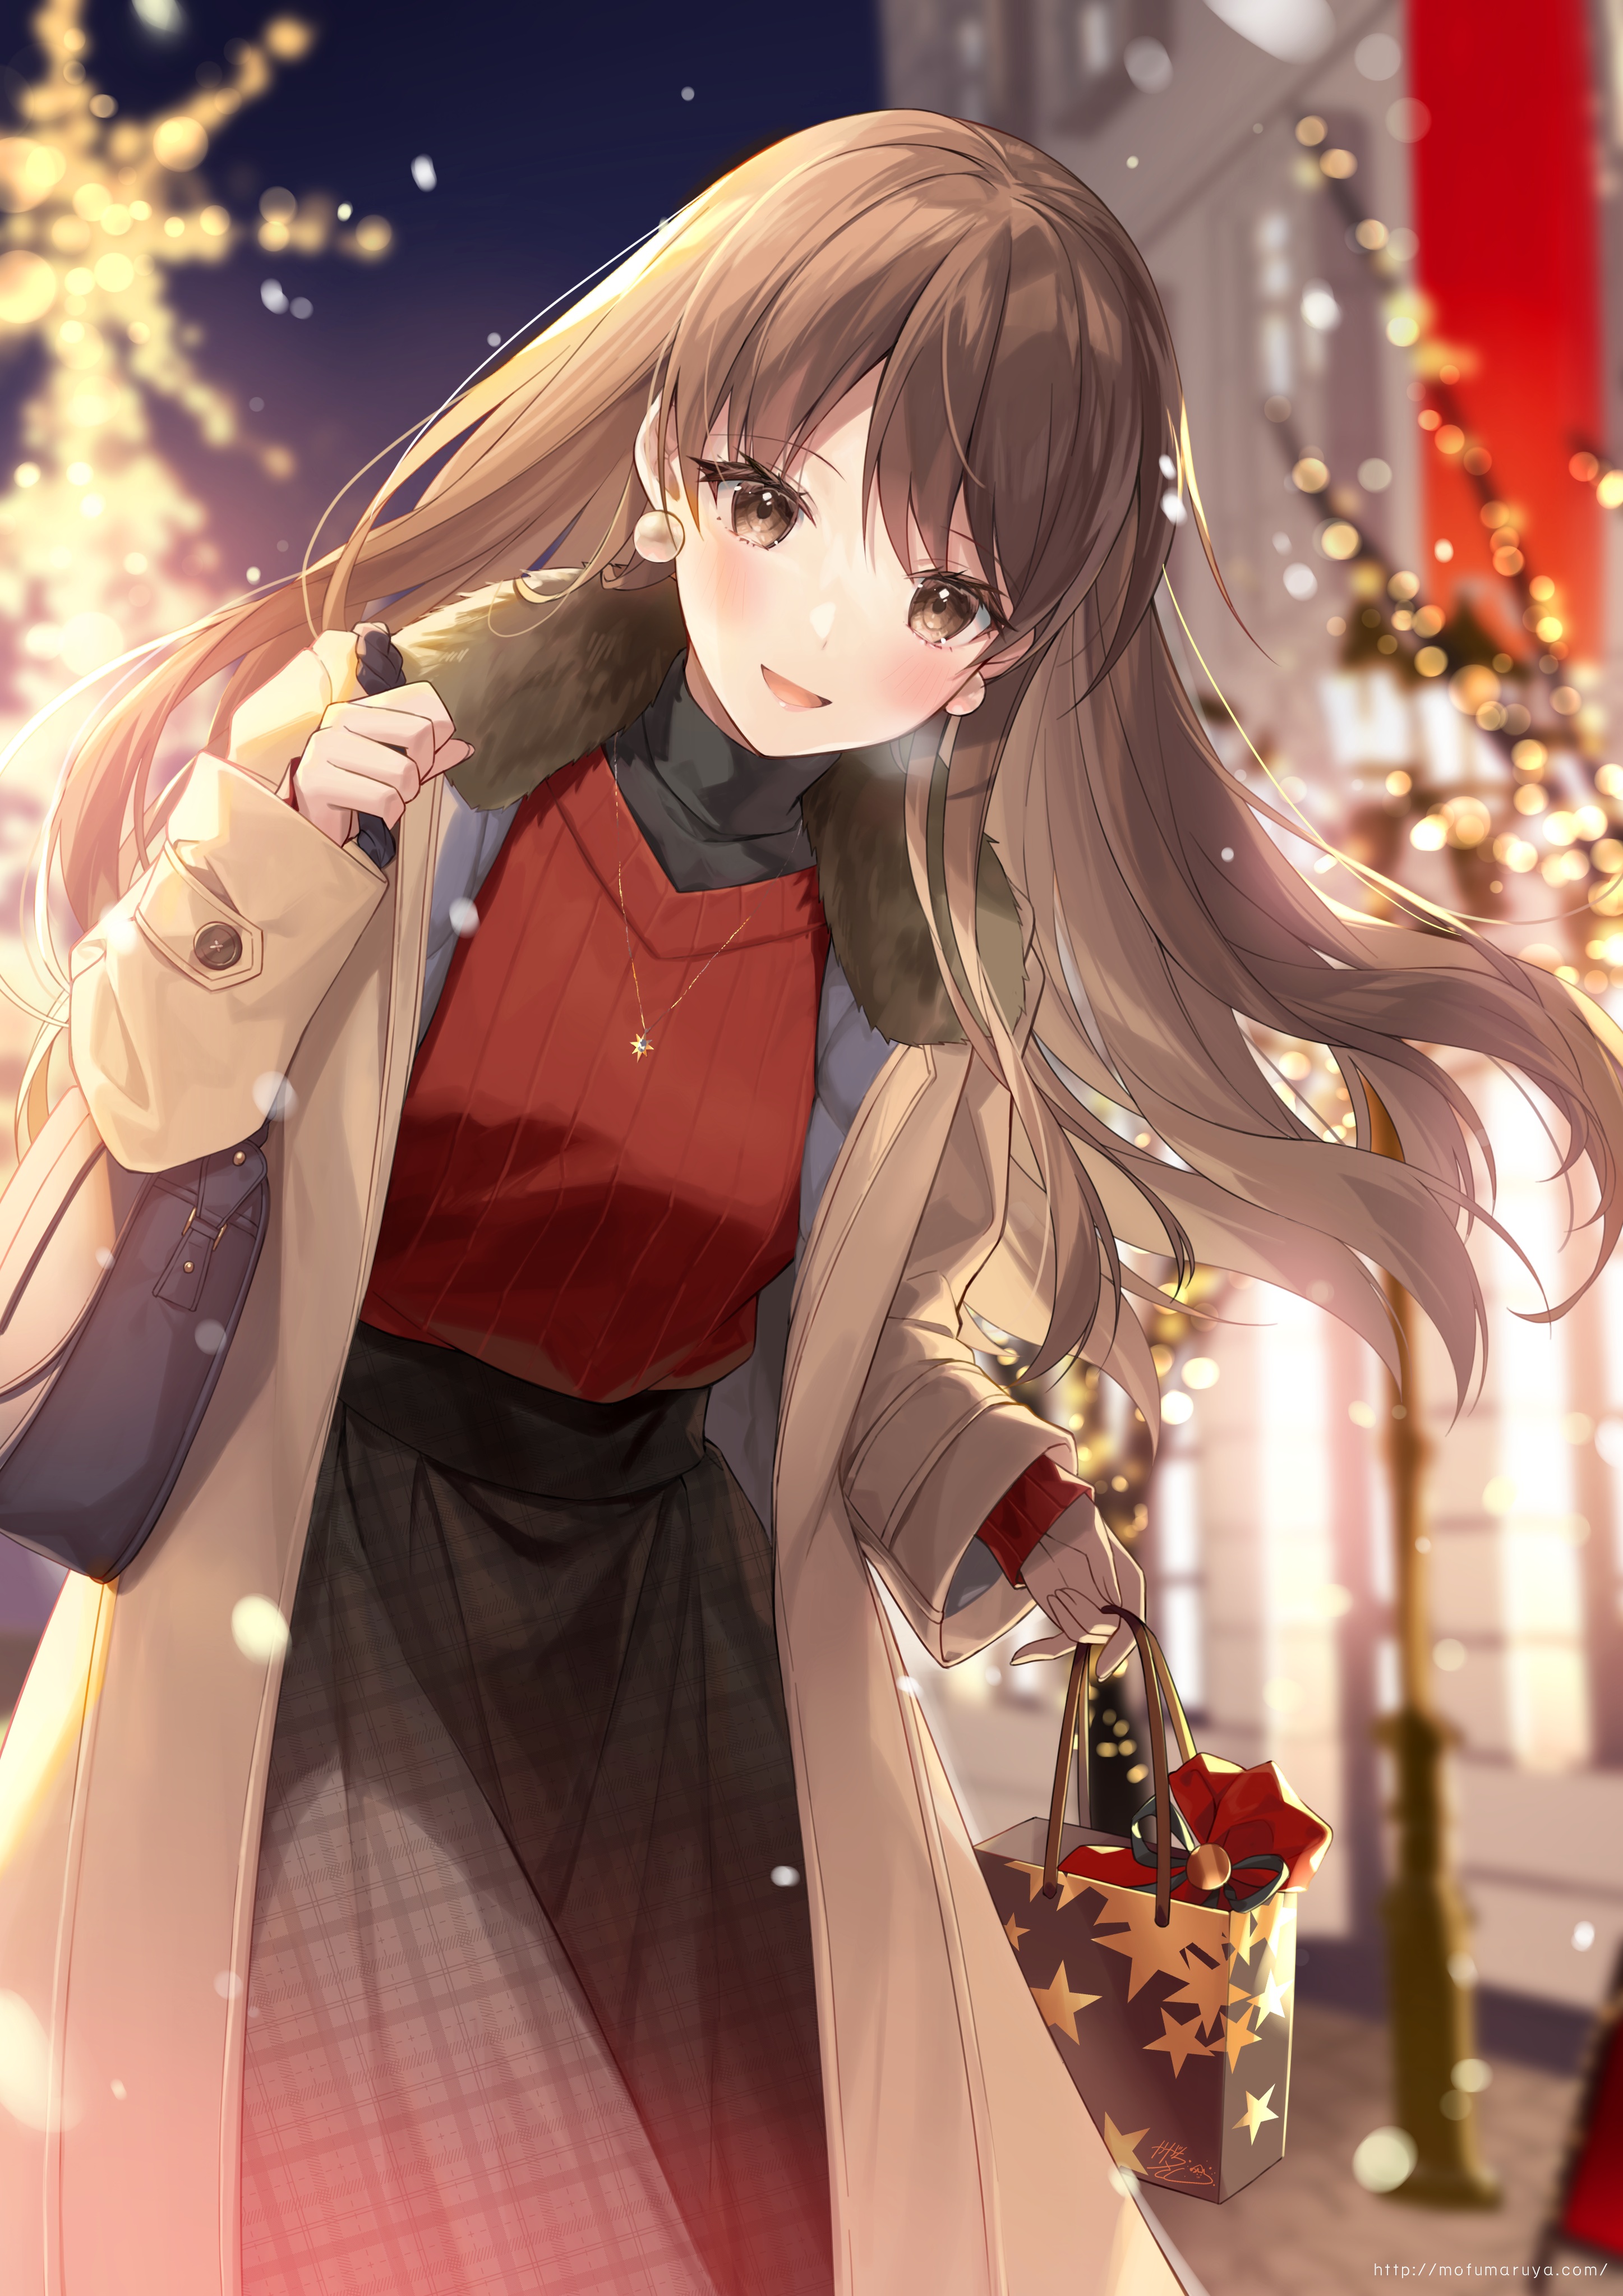 Anime 2894x4093 anime anime girls portrait display Christmas tree purse lights brunette brown eyes